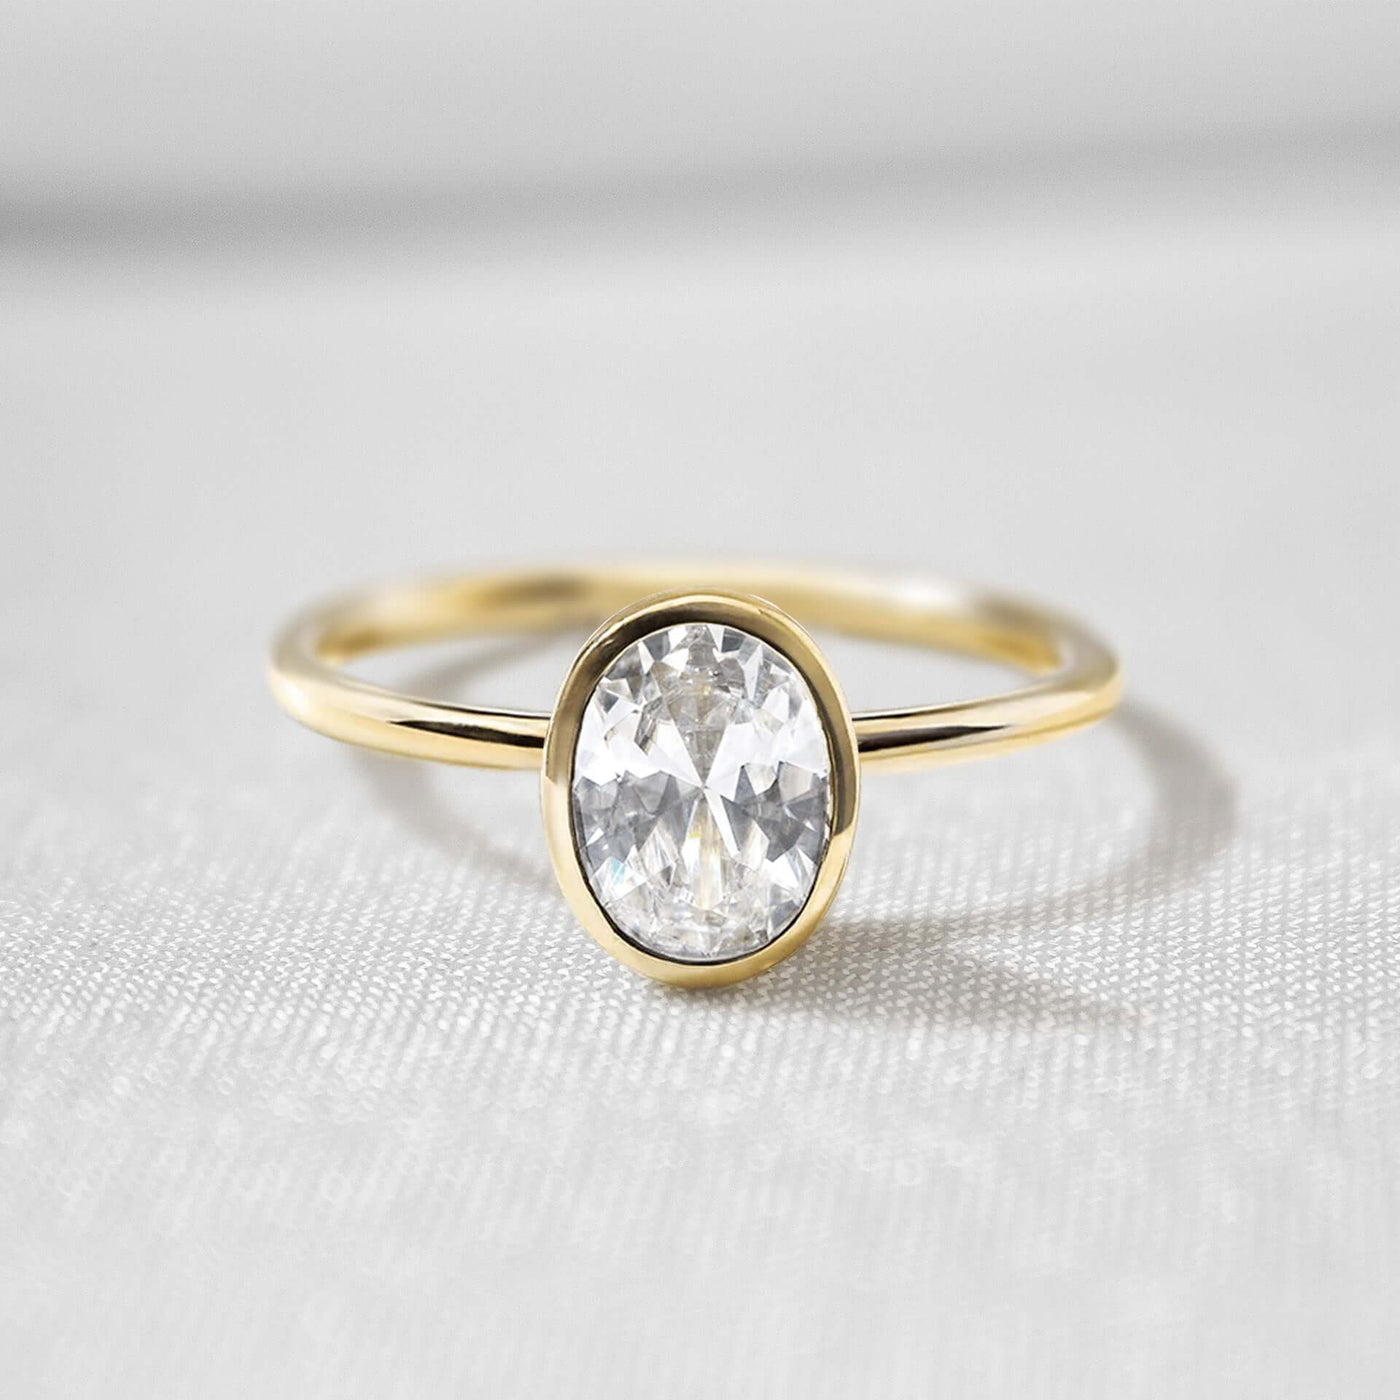 Shown in 1.0 carat " The Nova Bezel Diamond Engagement Ring | Lisa Robin#18k-yellow-gold